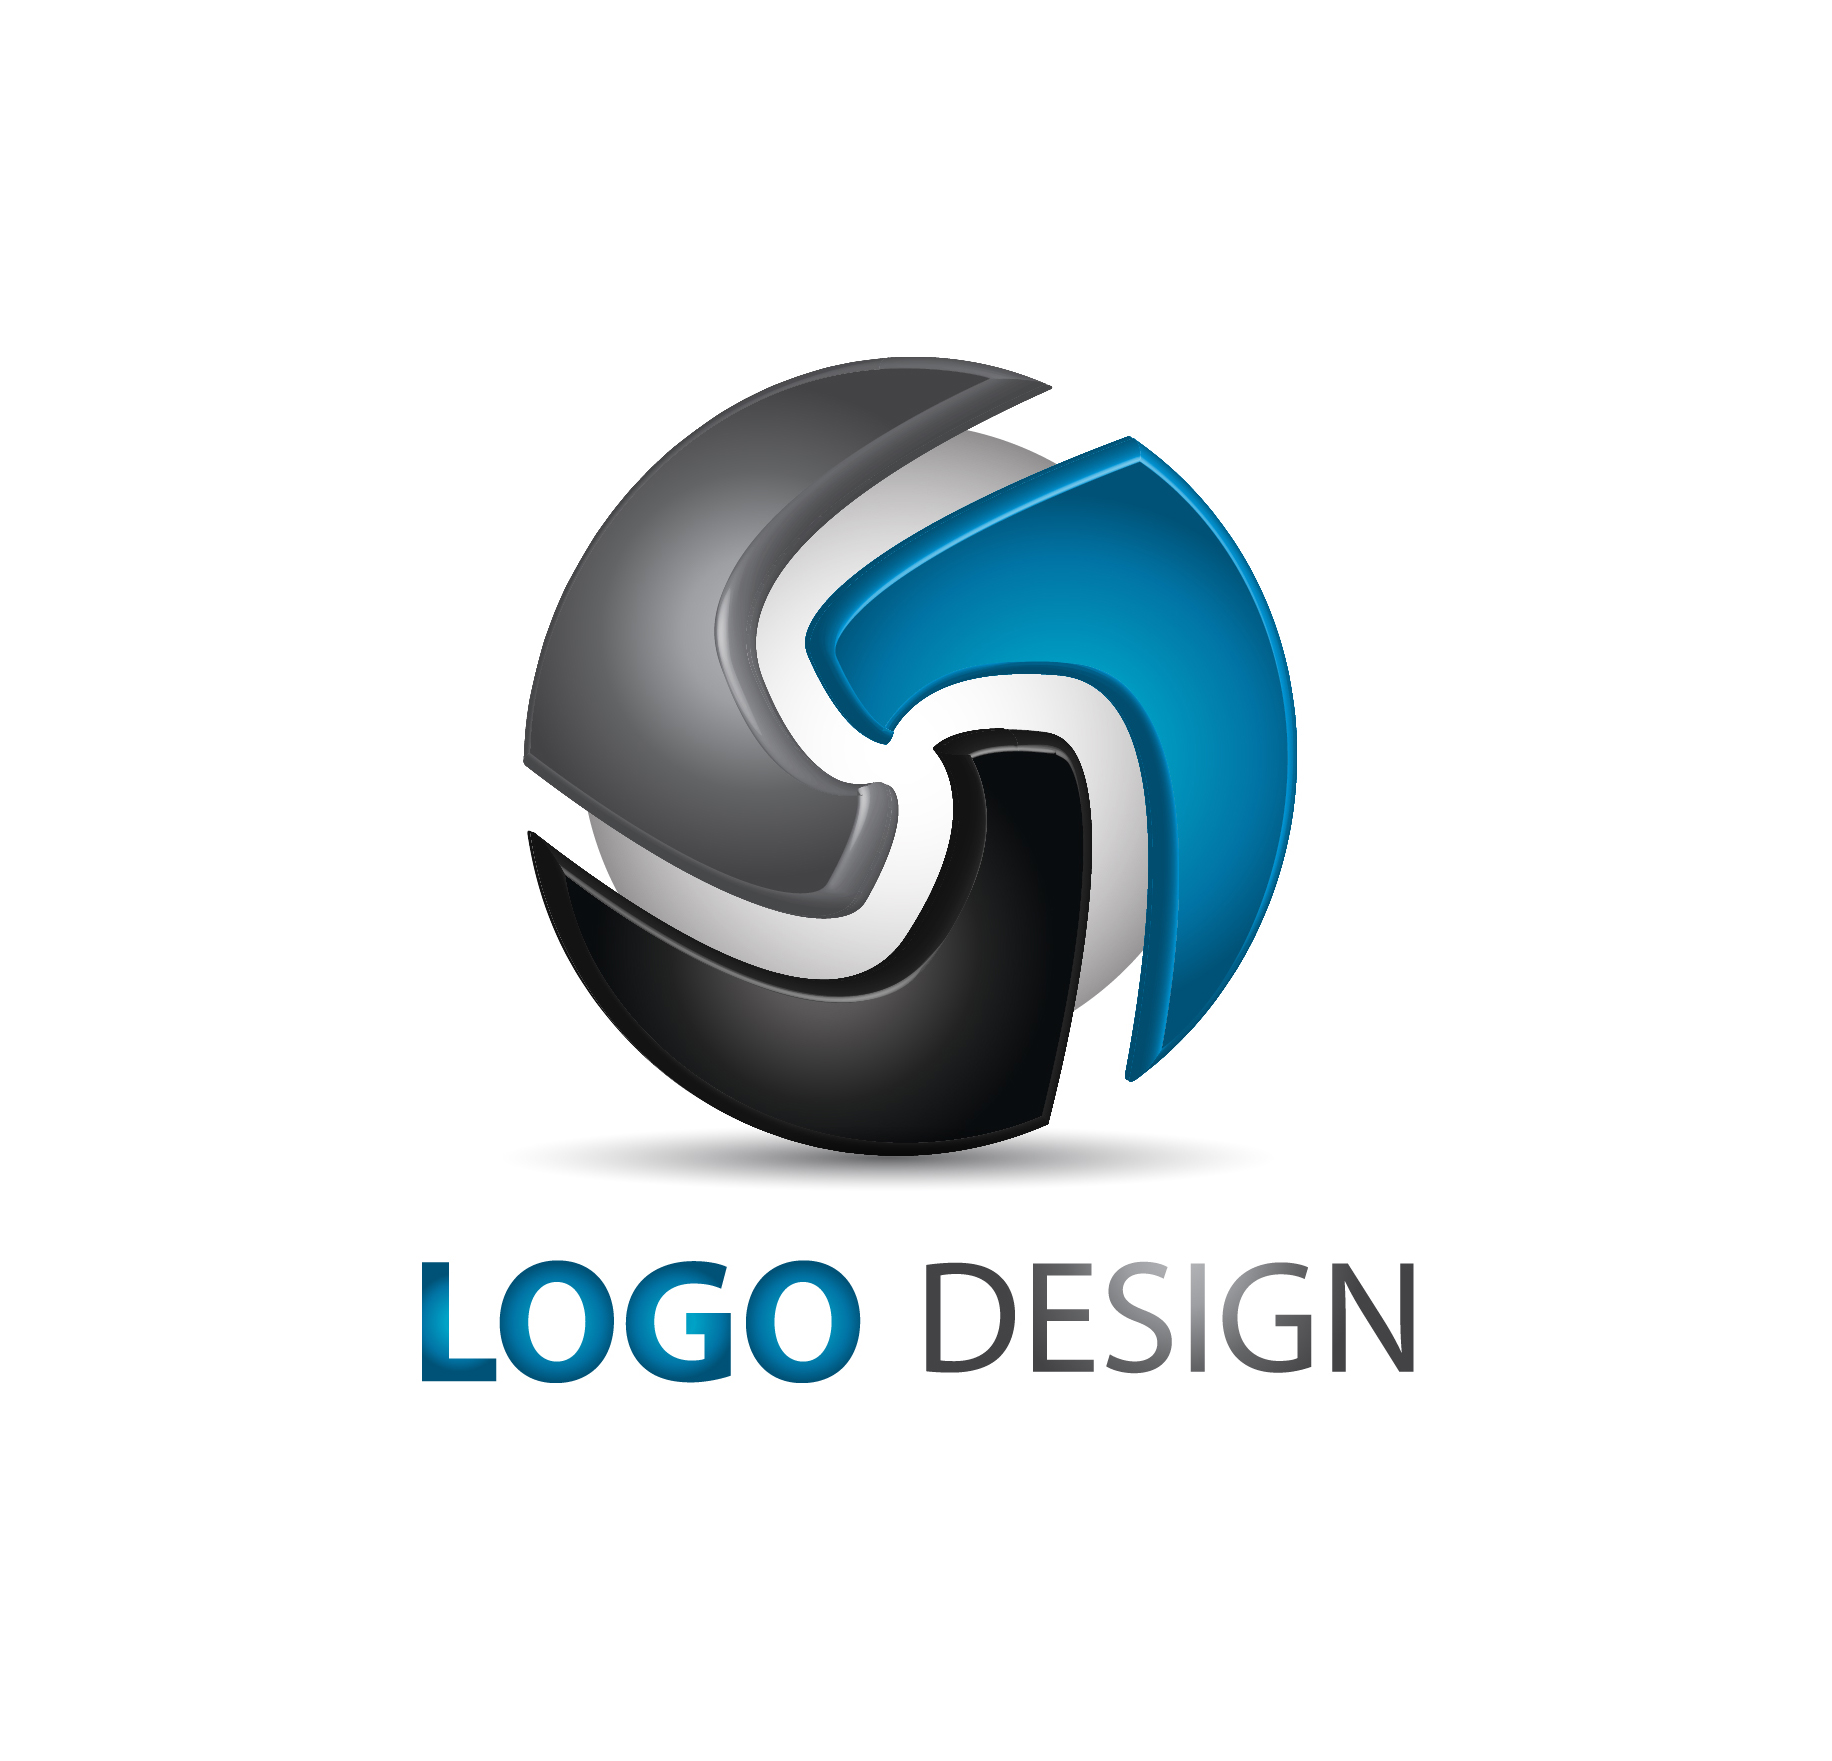 3D Logo Design Software For Pc - Use graphicsprings' logo design